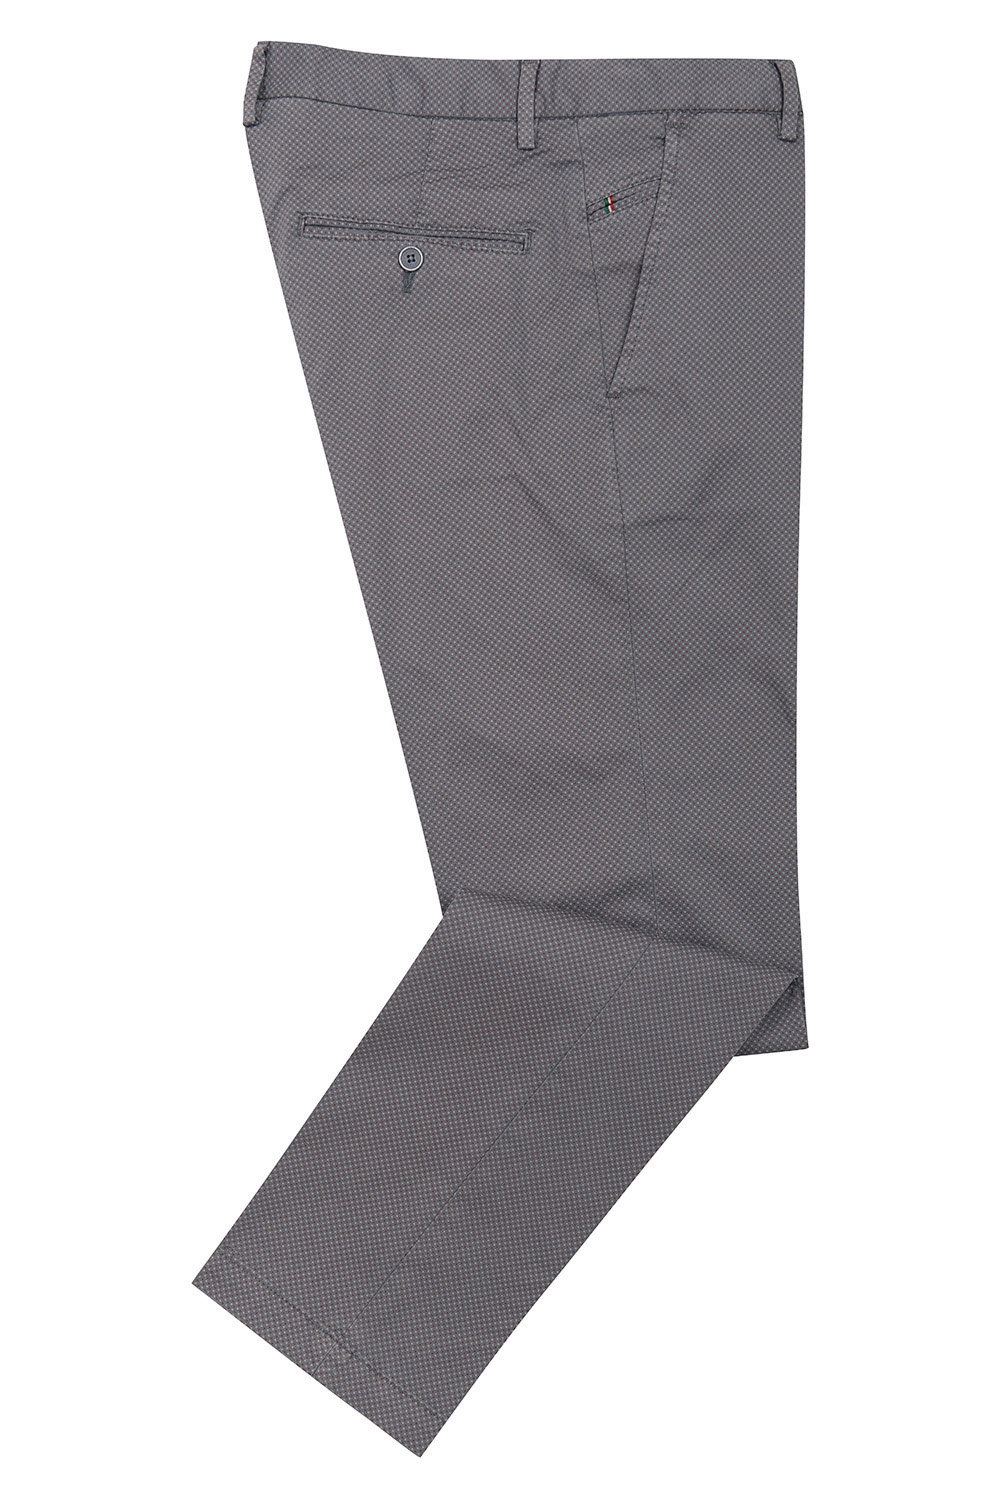 Pantaloni  gri print geometric 1